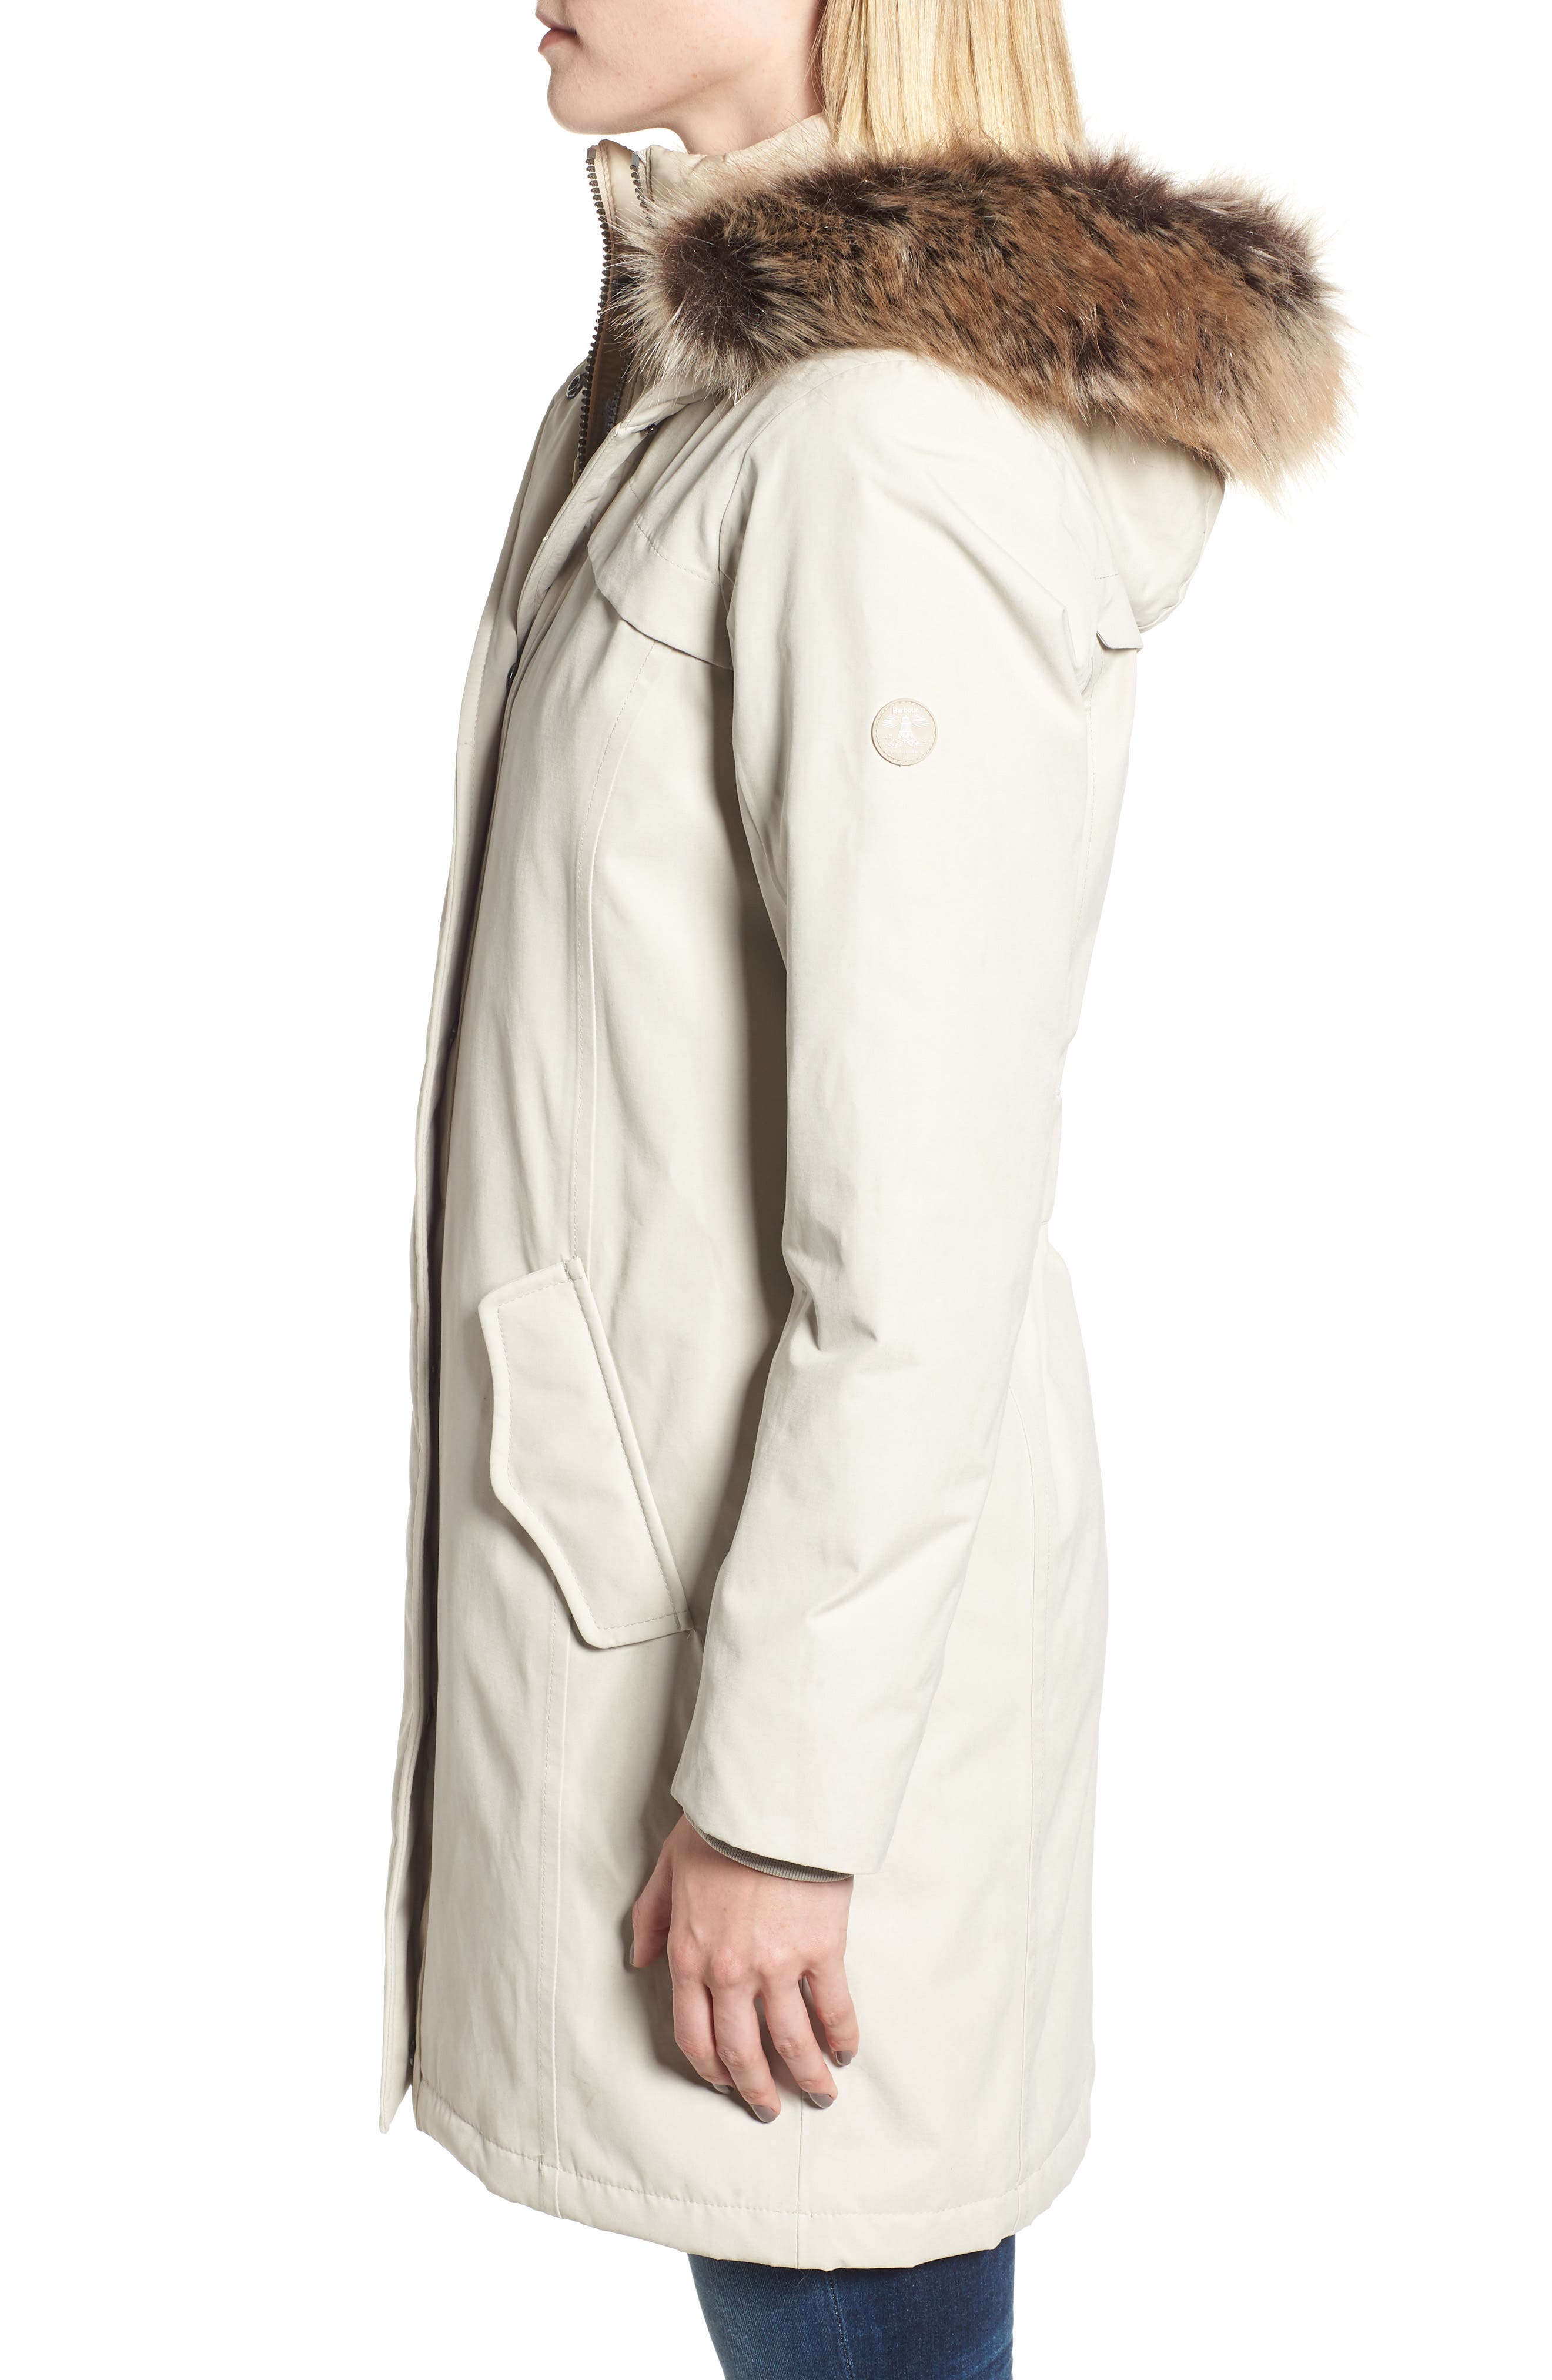 barbour coldhurst waterproof breathable parka jacket